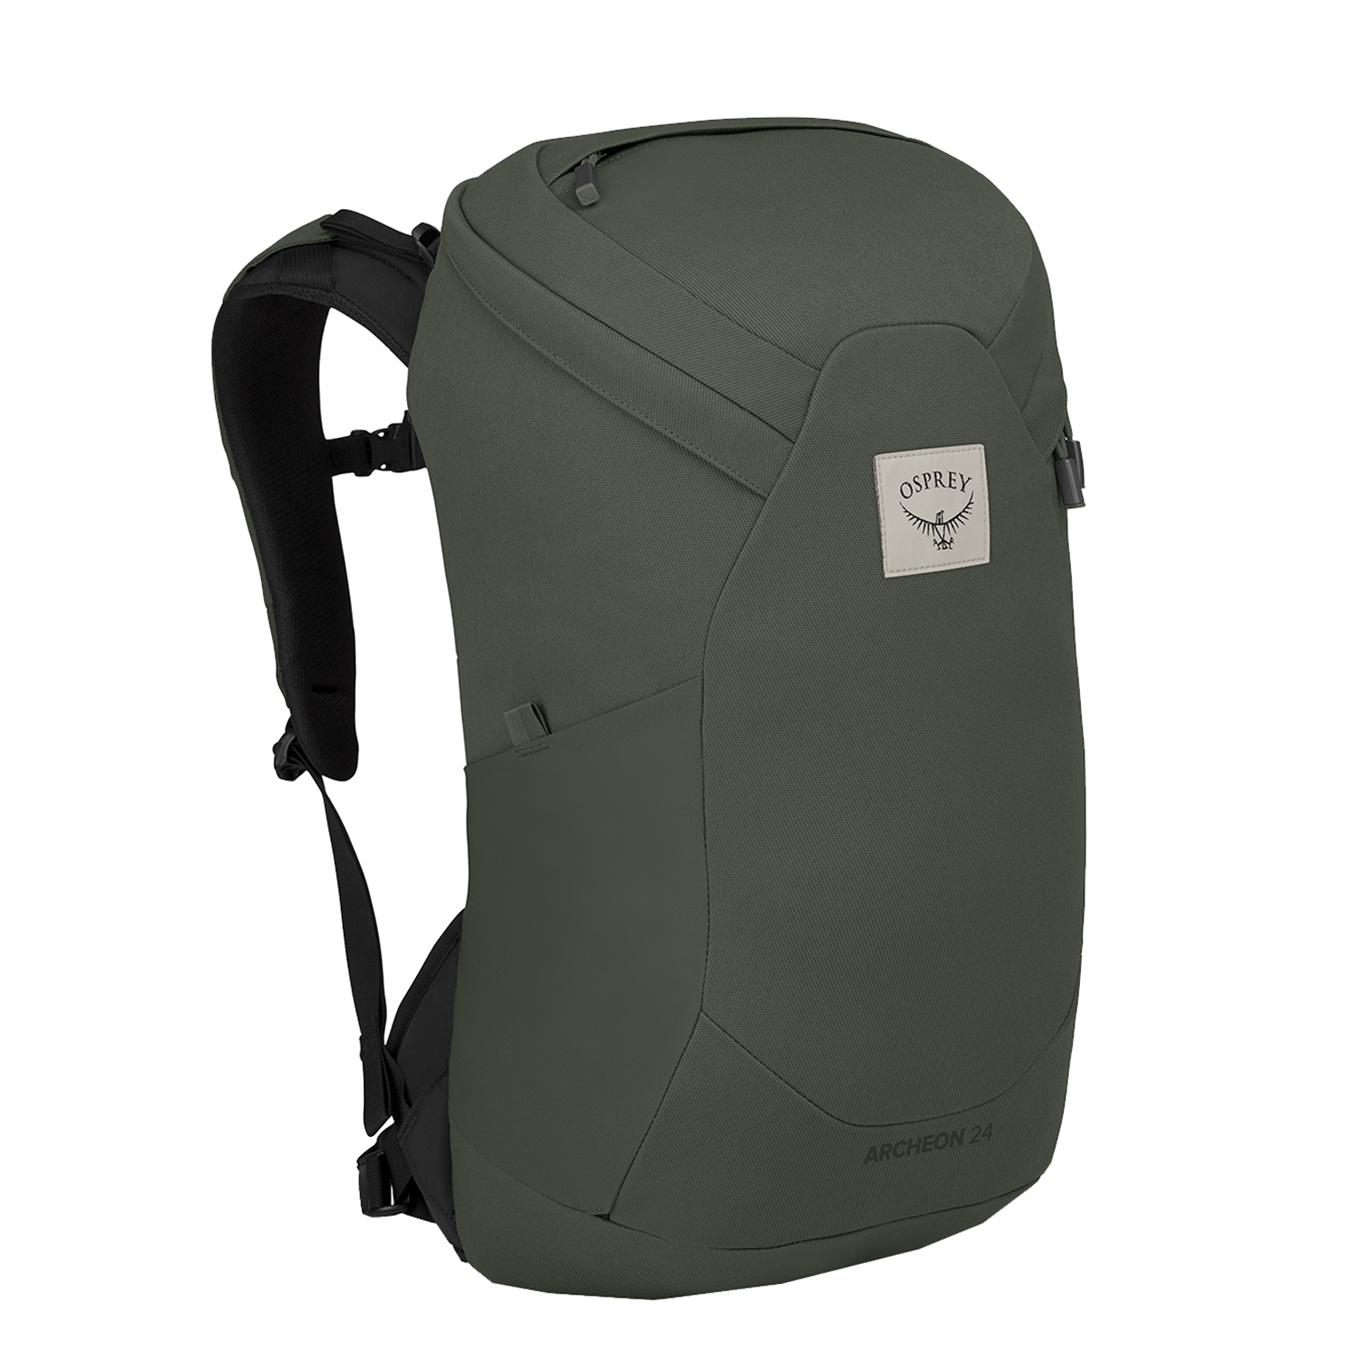 Osprey Archeon 24 Backpack haybale green Handbagage koffer